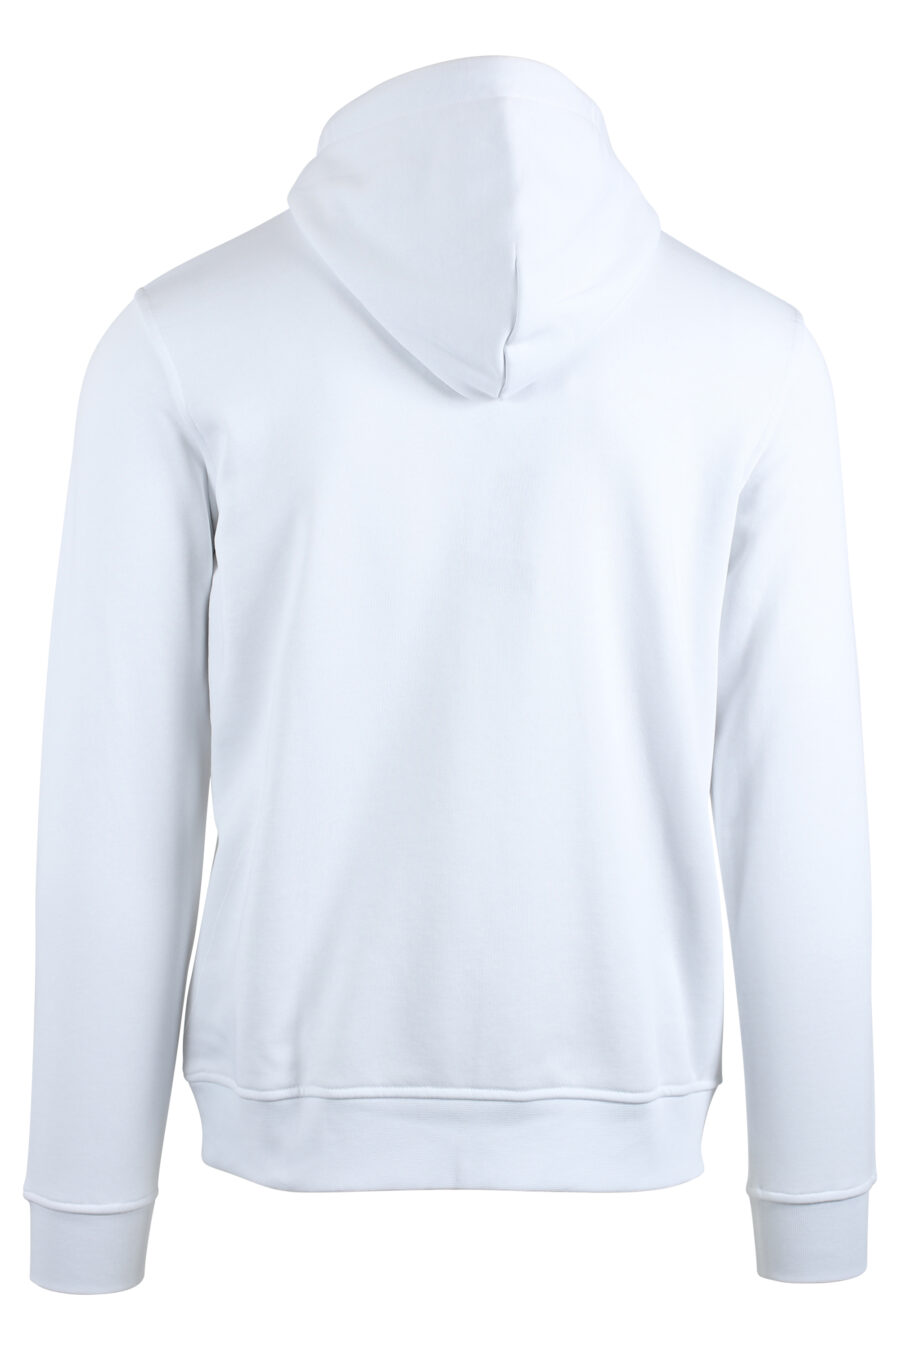 Sweatshirt branca com capuz e logótipo branco - IMG 4774